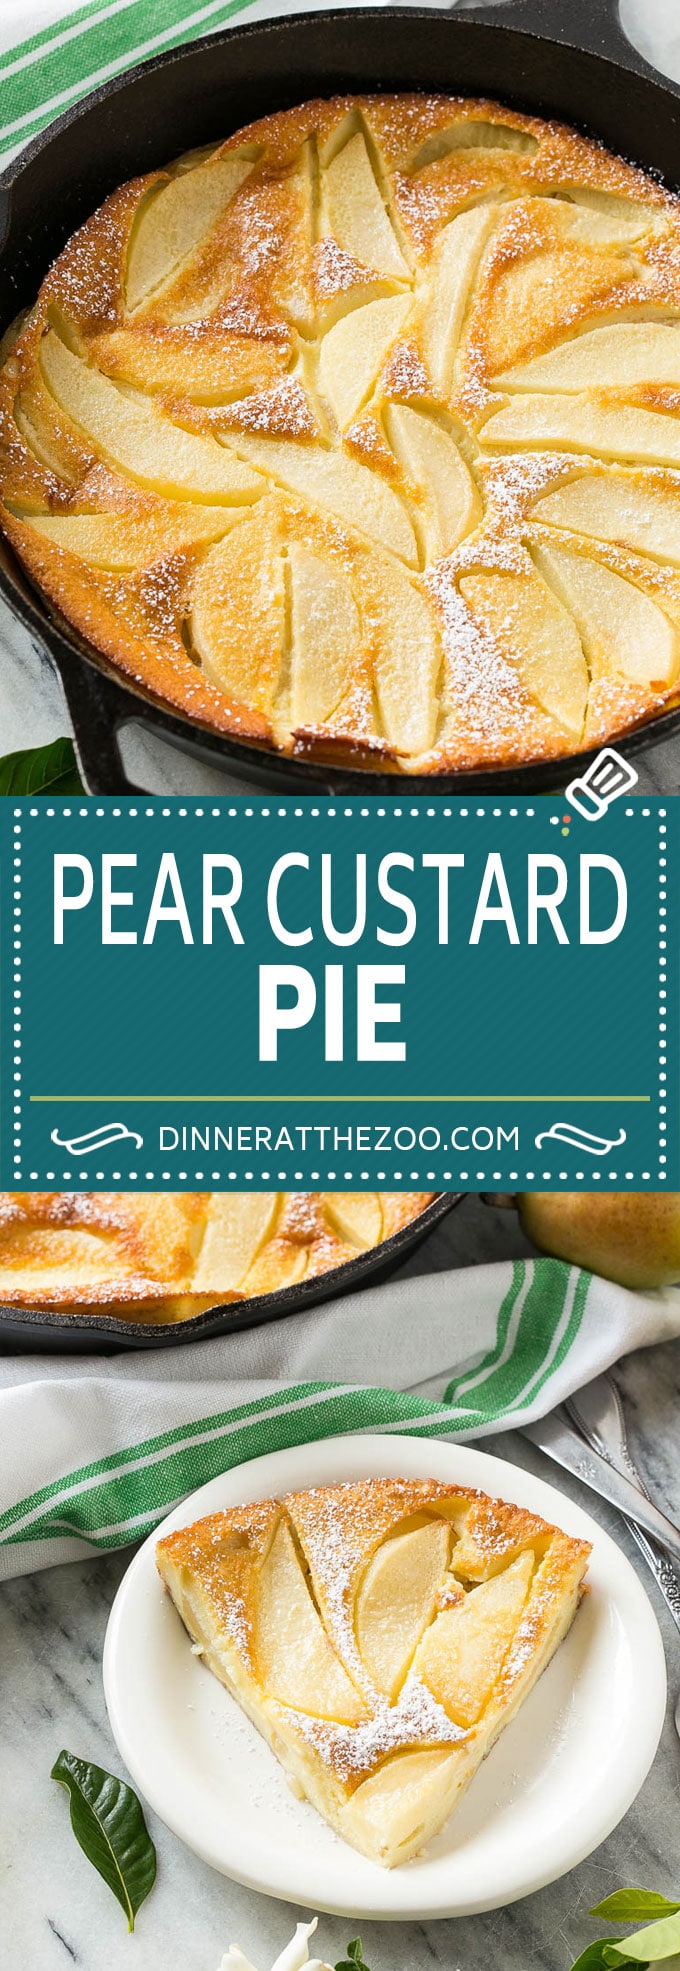 Pear Custard Pie Recipe | Pear Pie #pears #fall #pie #dessert #dinneratthezoo